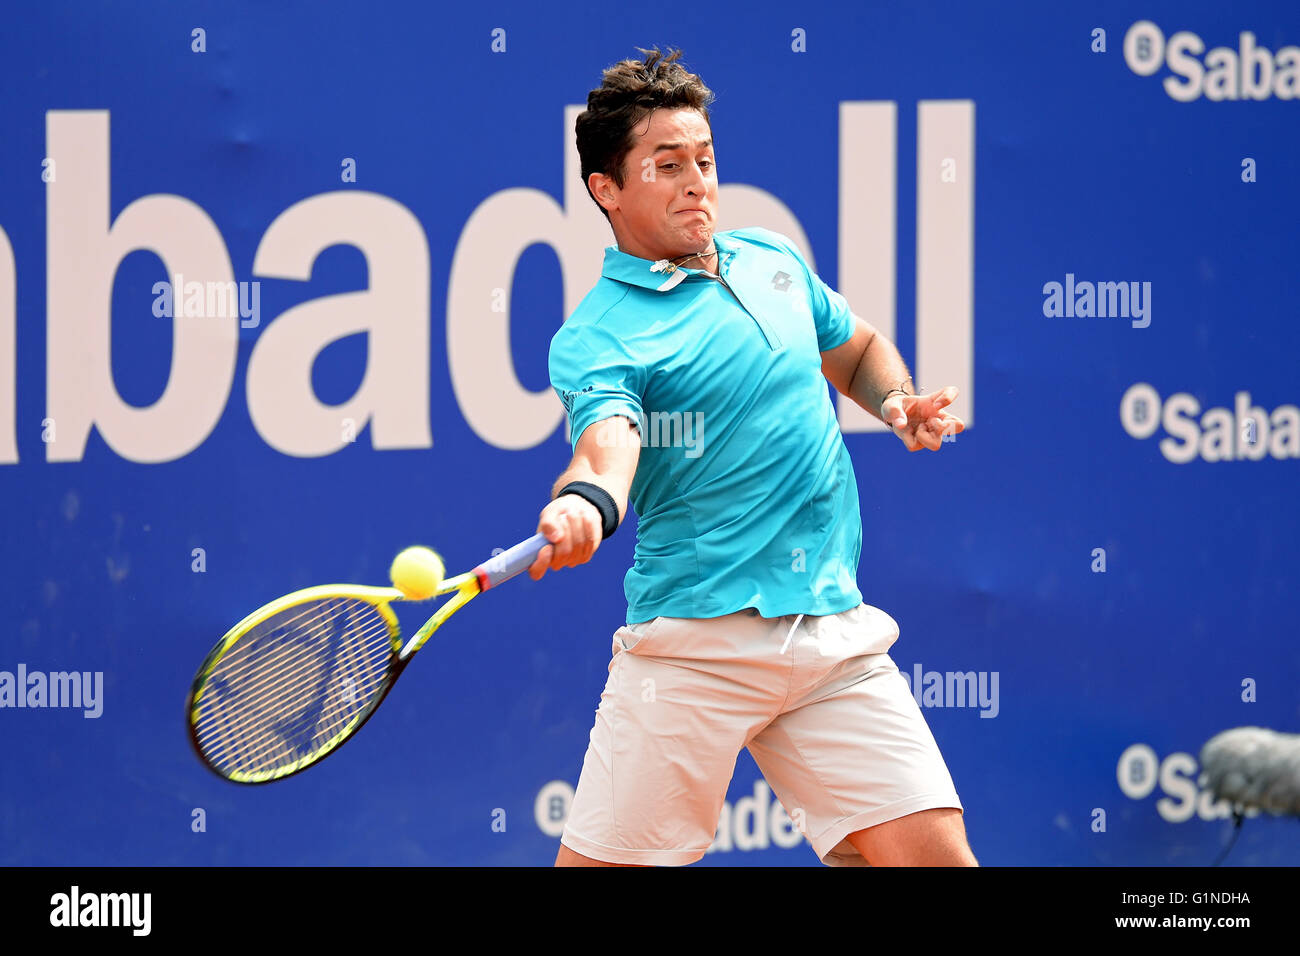 BARCELONA - APR 22: Nicolas Almagro (Spanish tennis player) plays at the  ATP Barcelona Open Banc Sabadell Stock Photo - Alamy